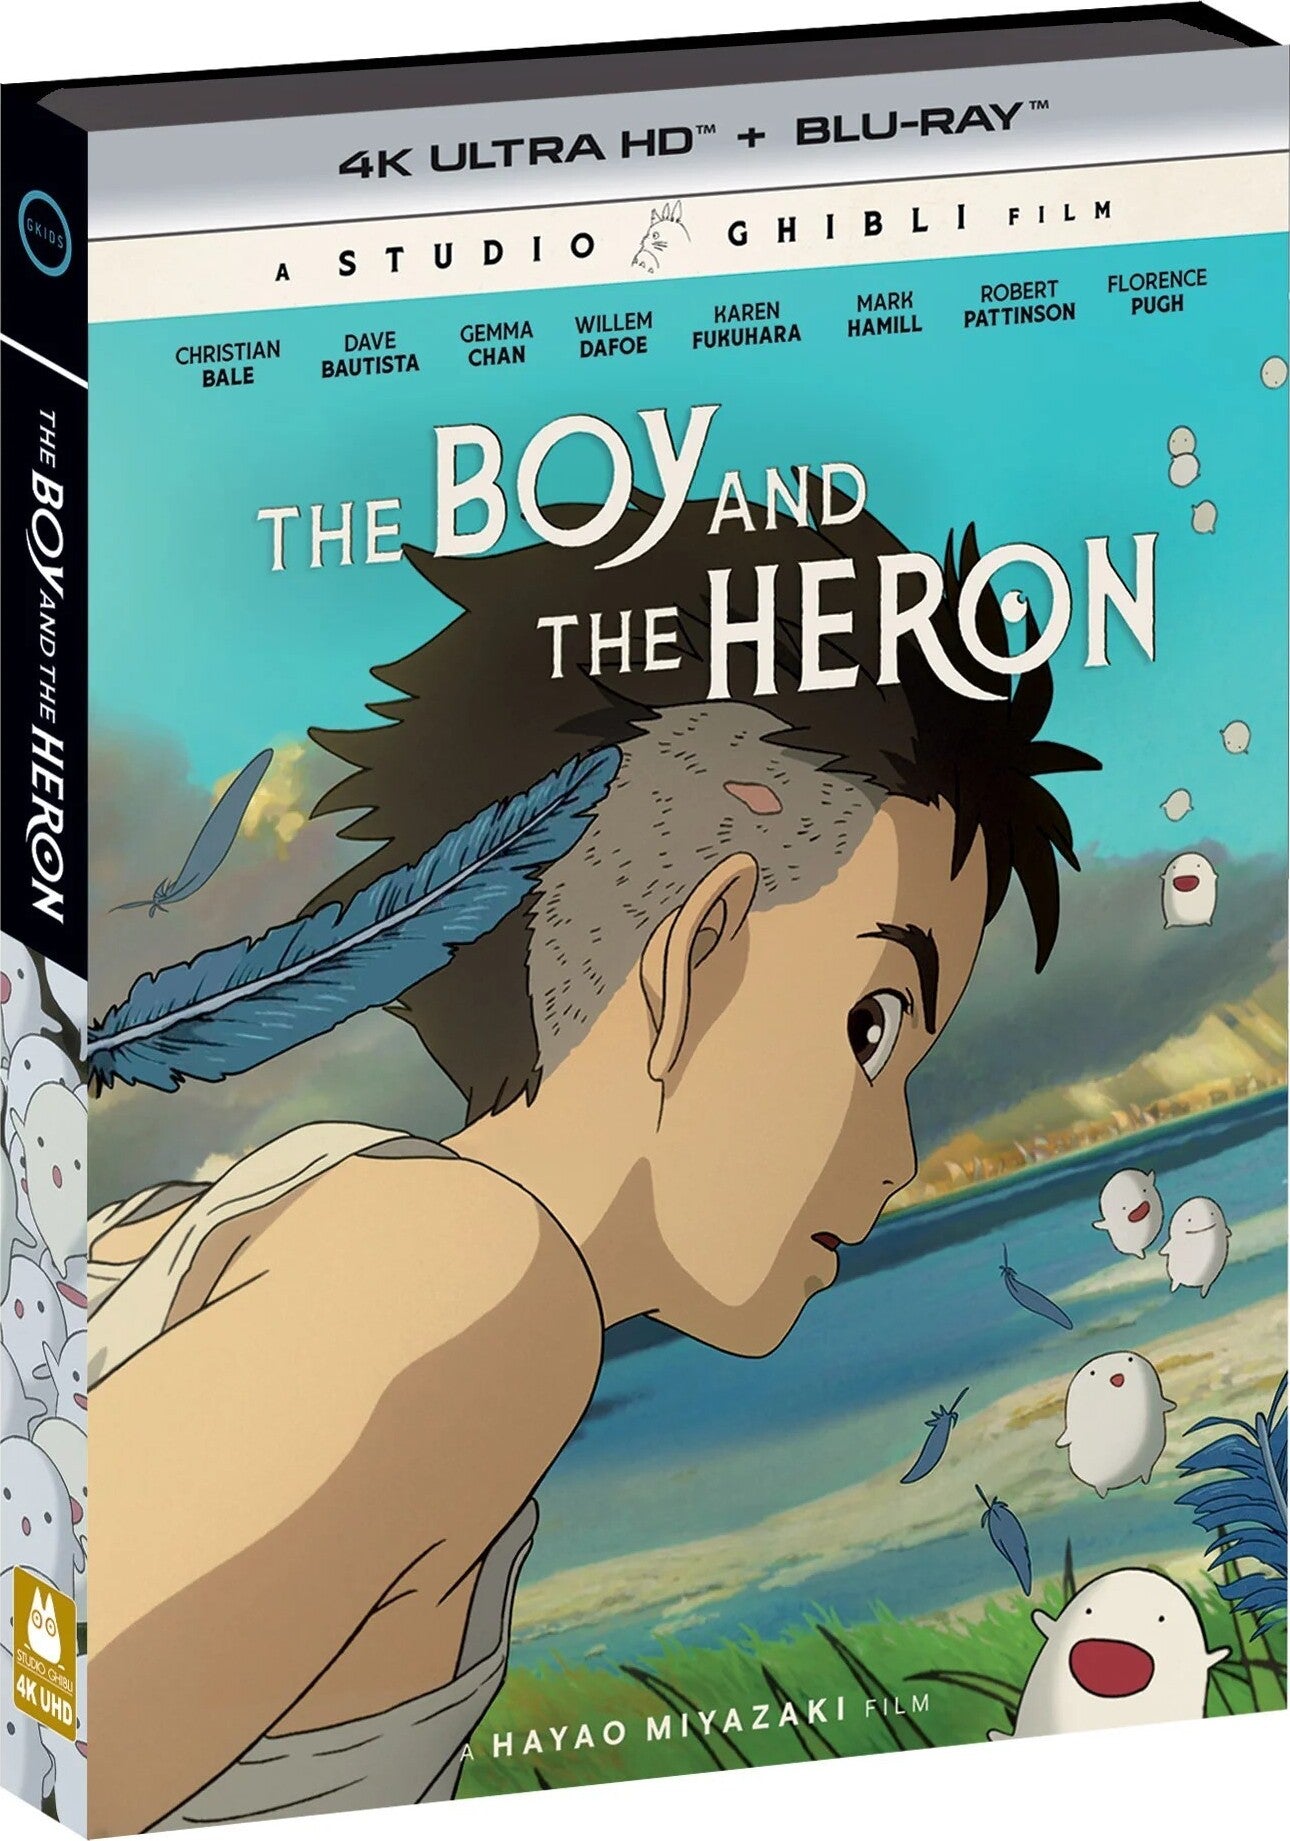 The Boy and the Heron [Steelbook] [4K UHD] [US]